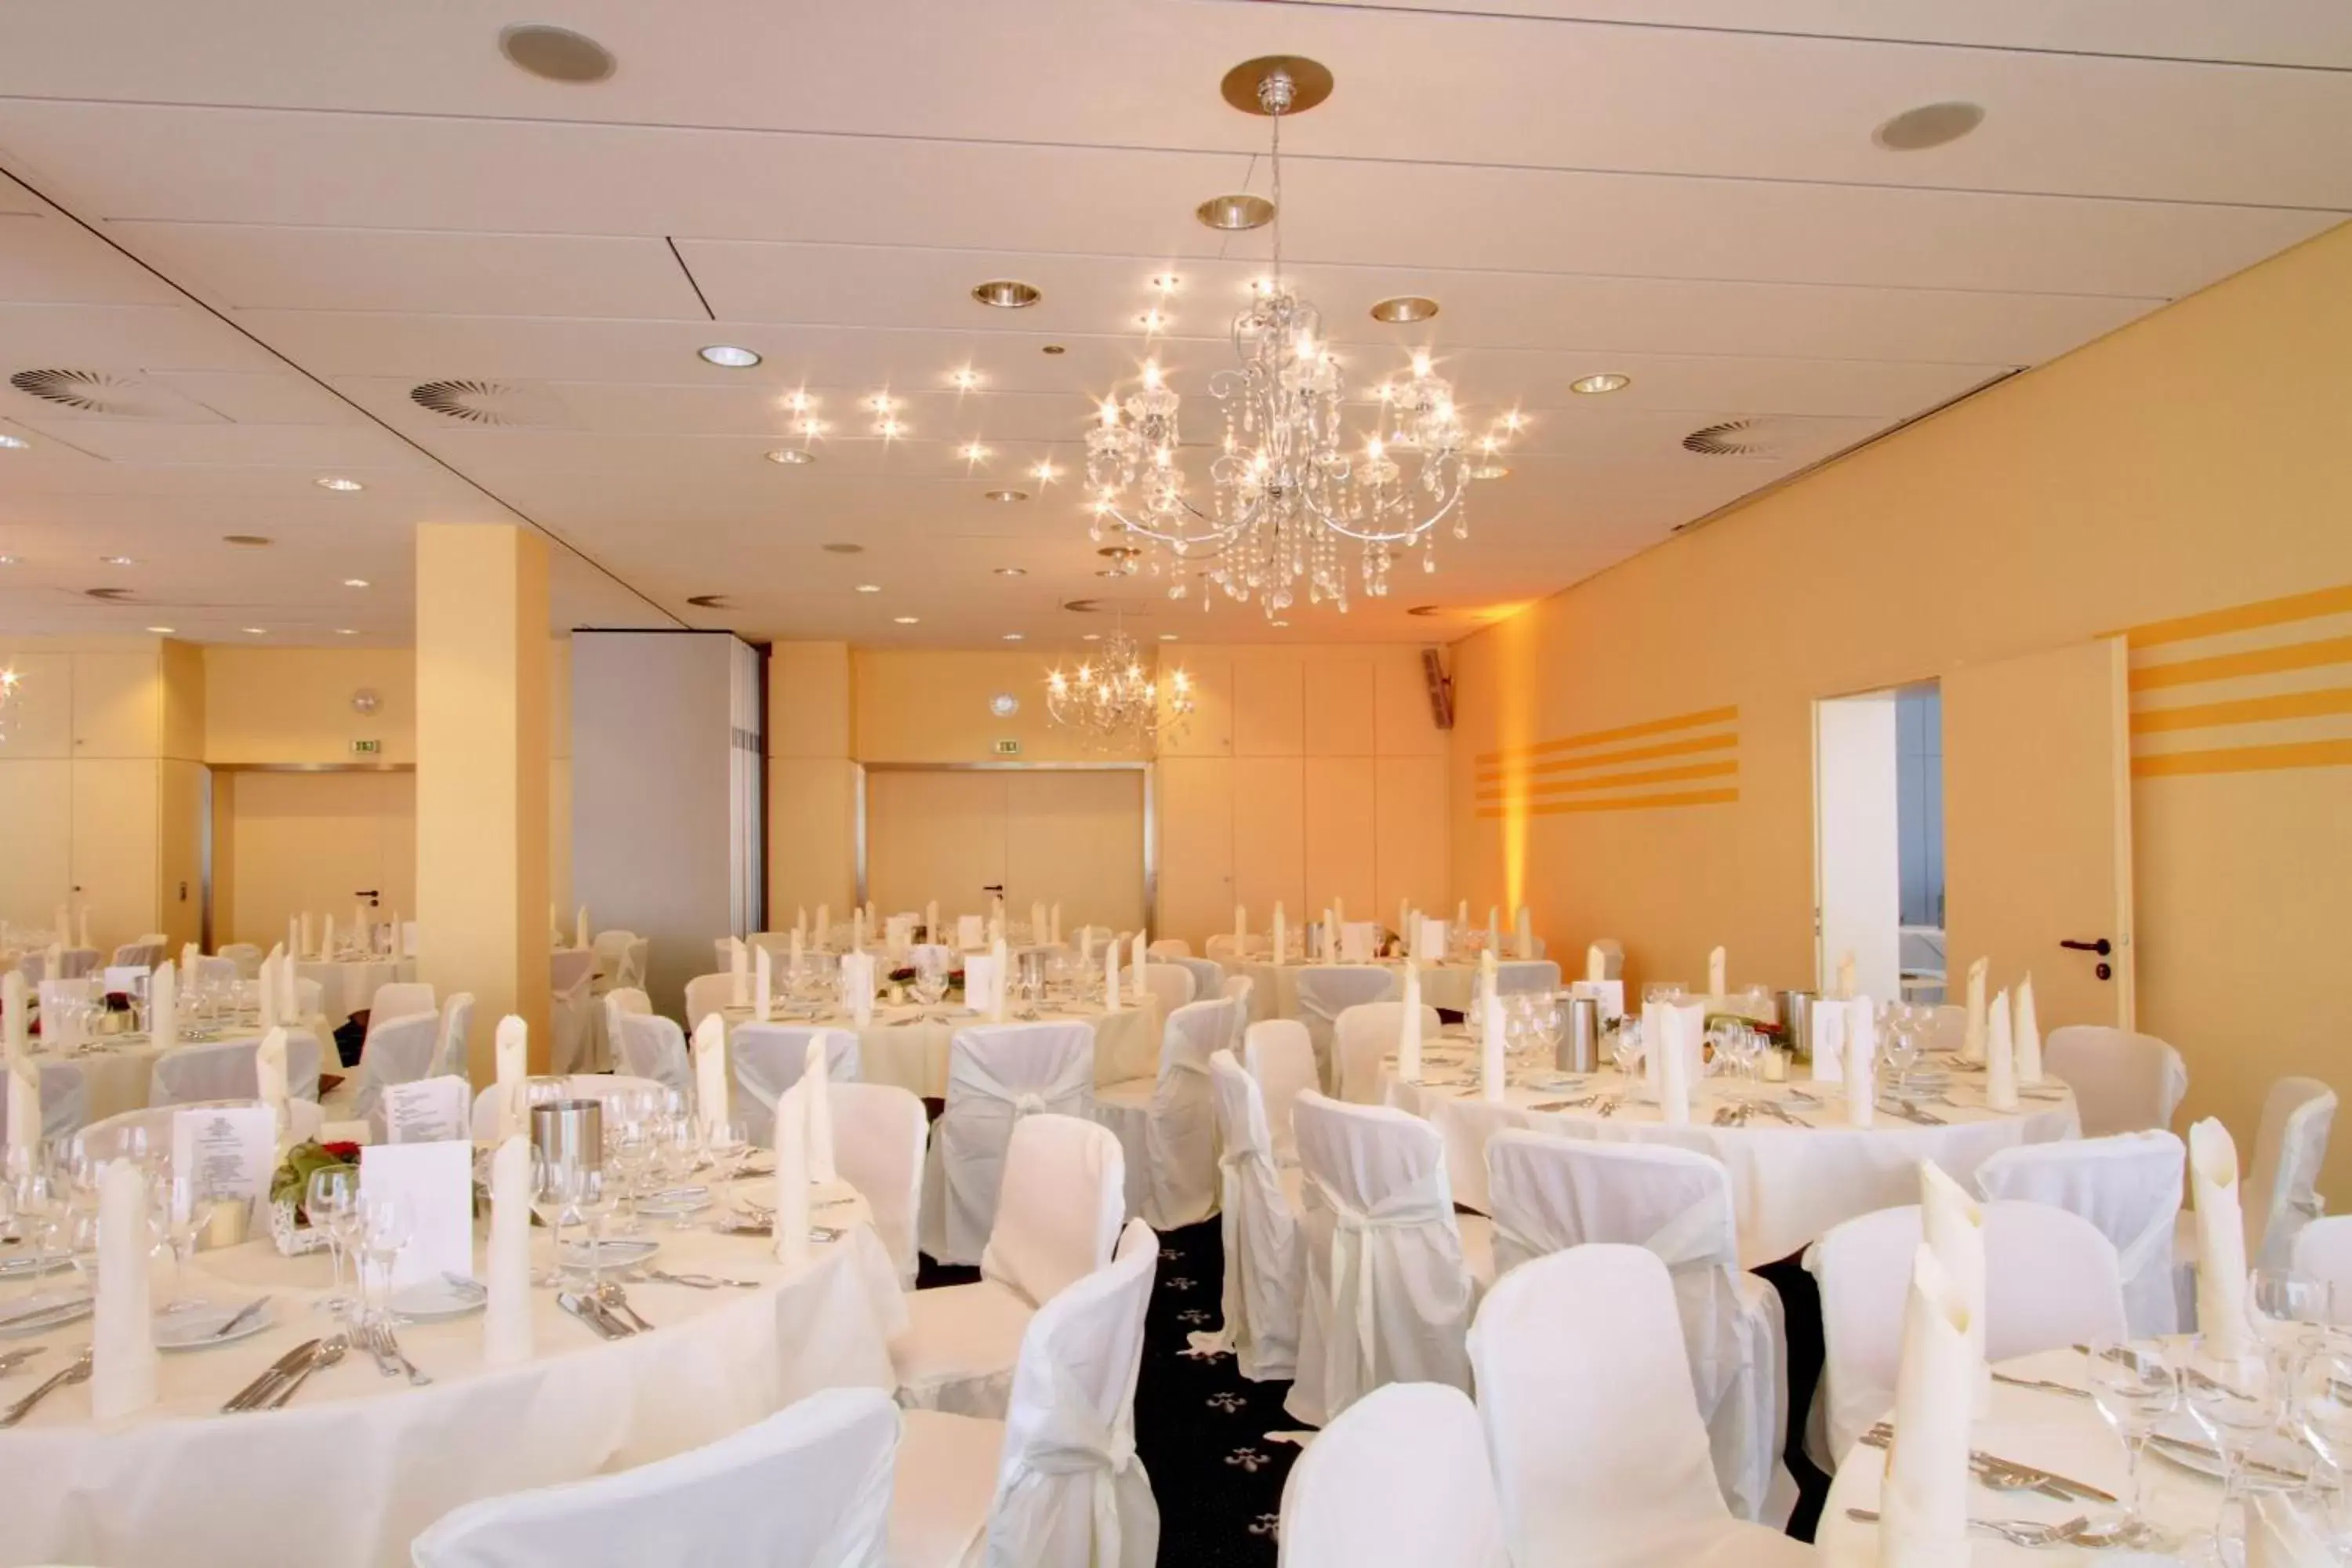 Banquet/Function facilities, Banquet Facilities in Best Western Plus Hotel Steinsgarten